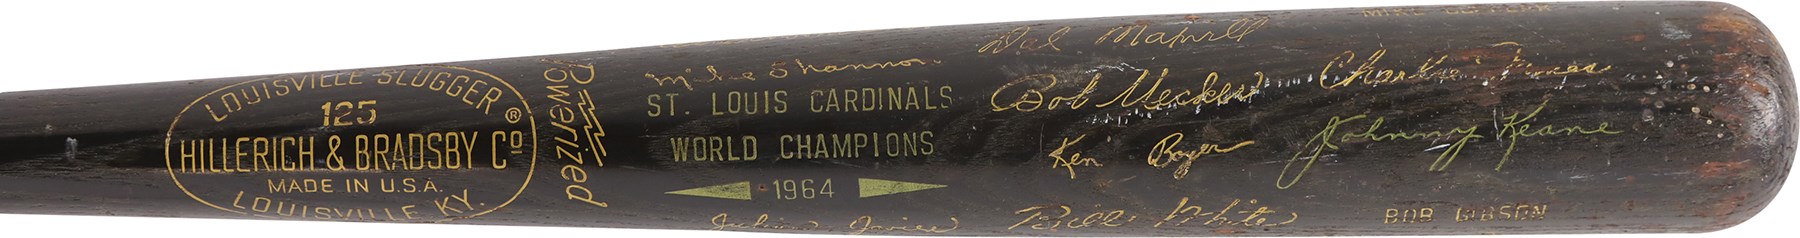 St. Louis Cardinals - 1964 World Champion St. Louis Cardinals Black Bat